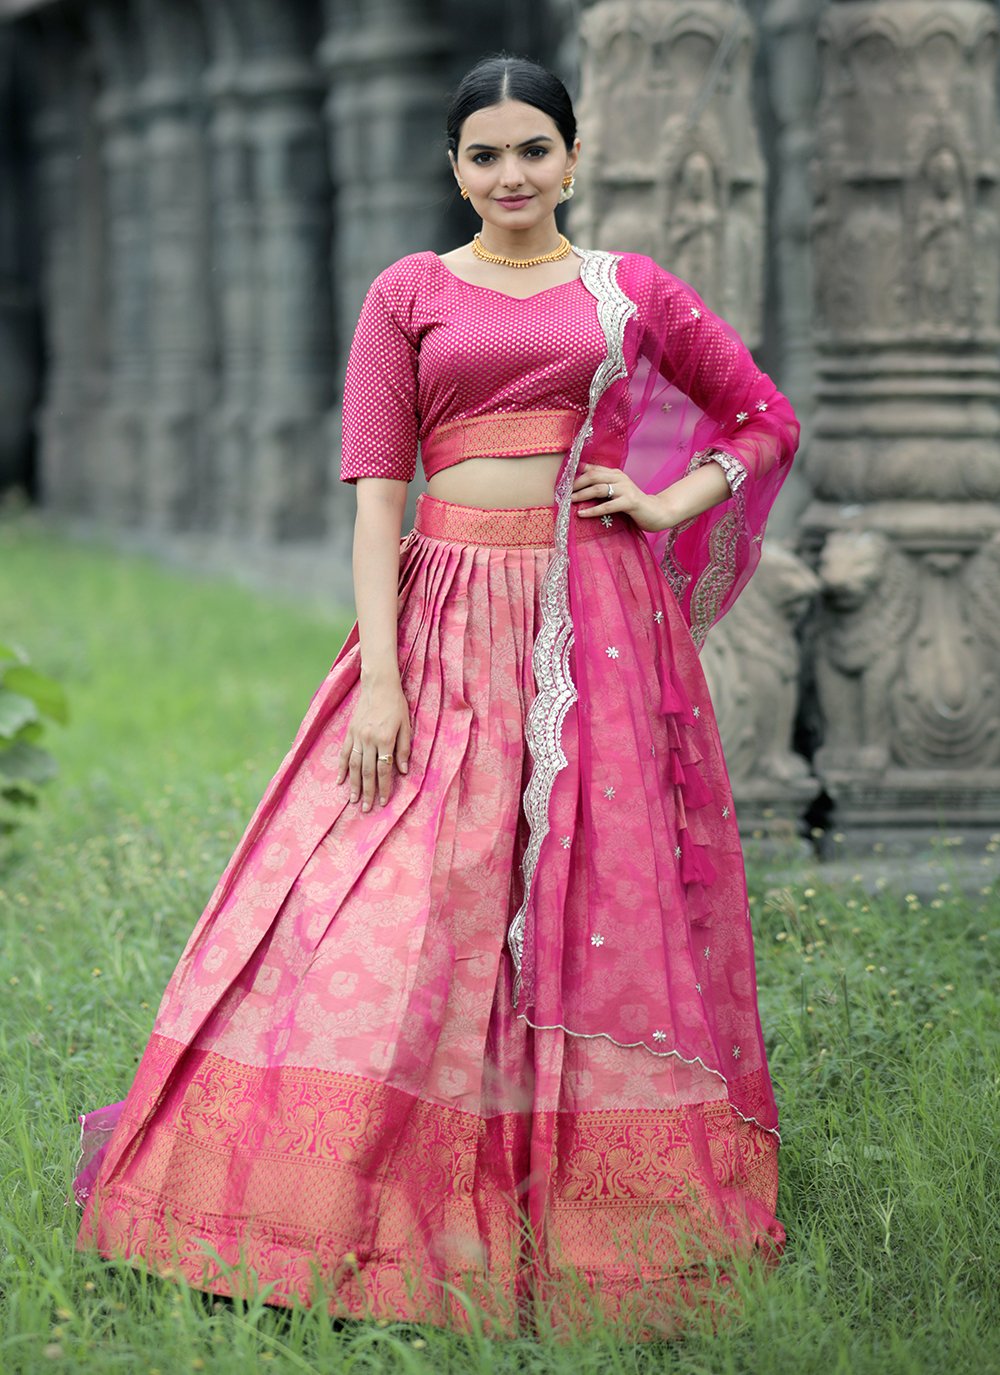 Kalyan Silks | Buy Online Sarees, Bridal Sarees & Kanchipuram Silks